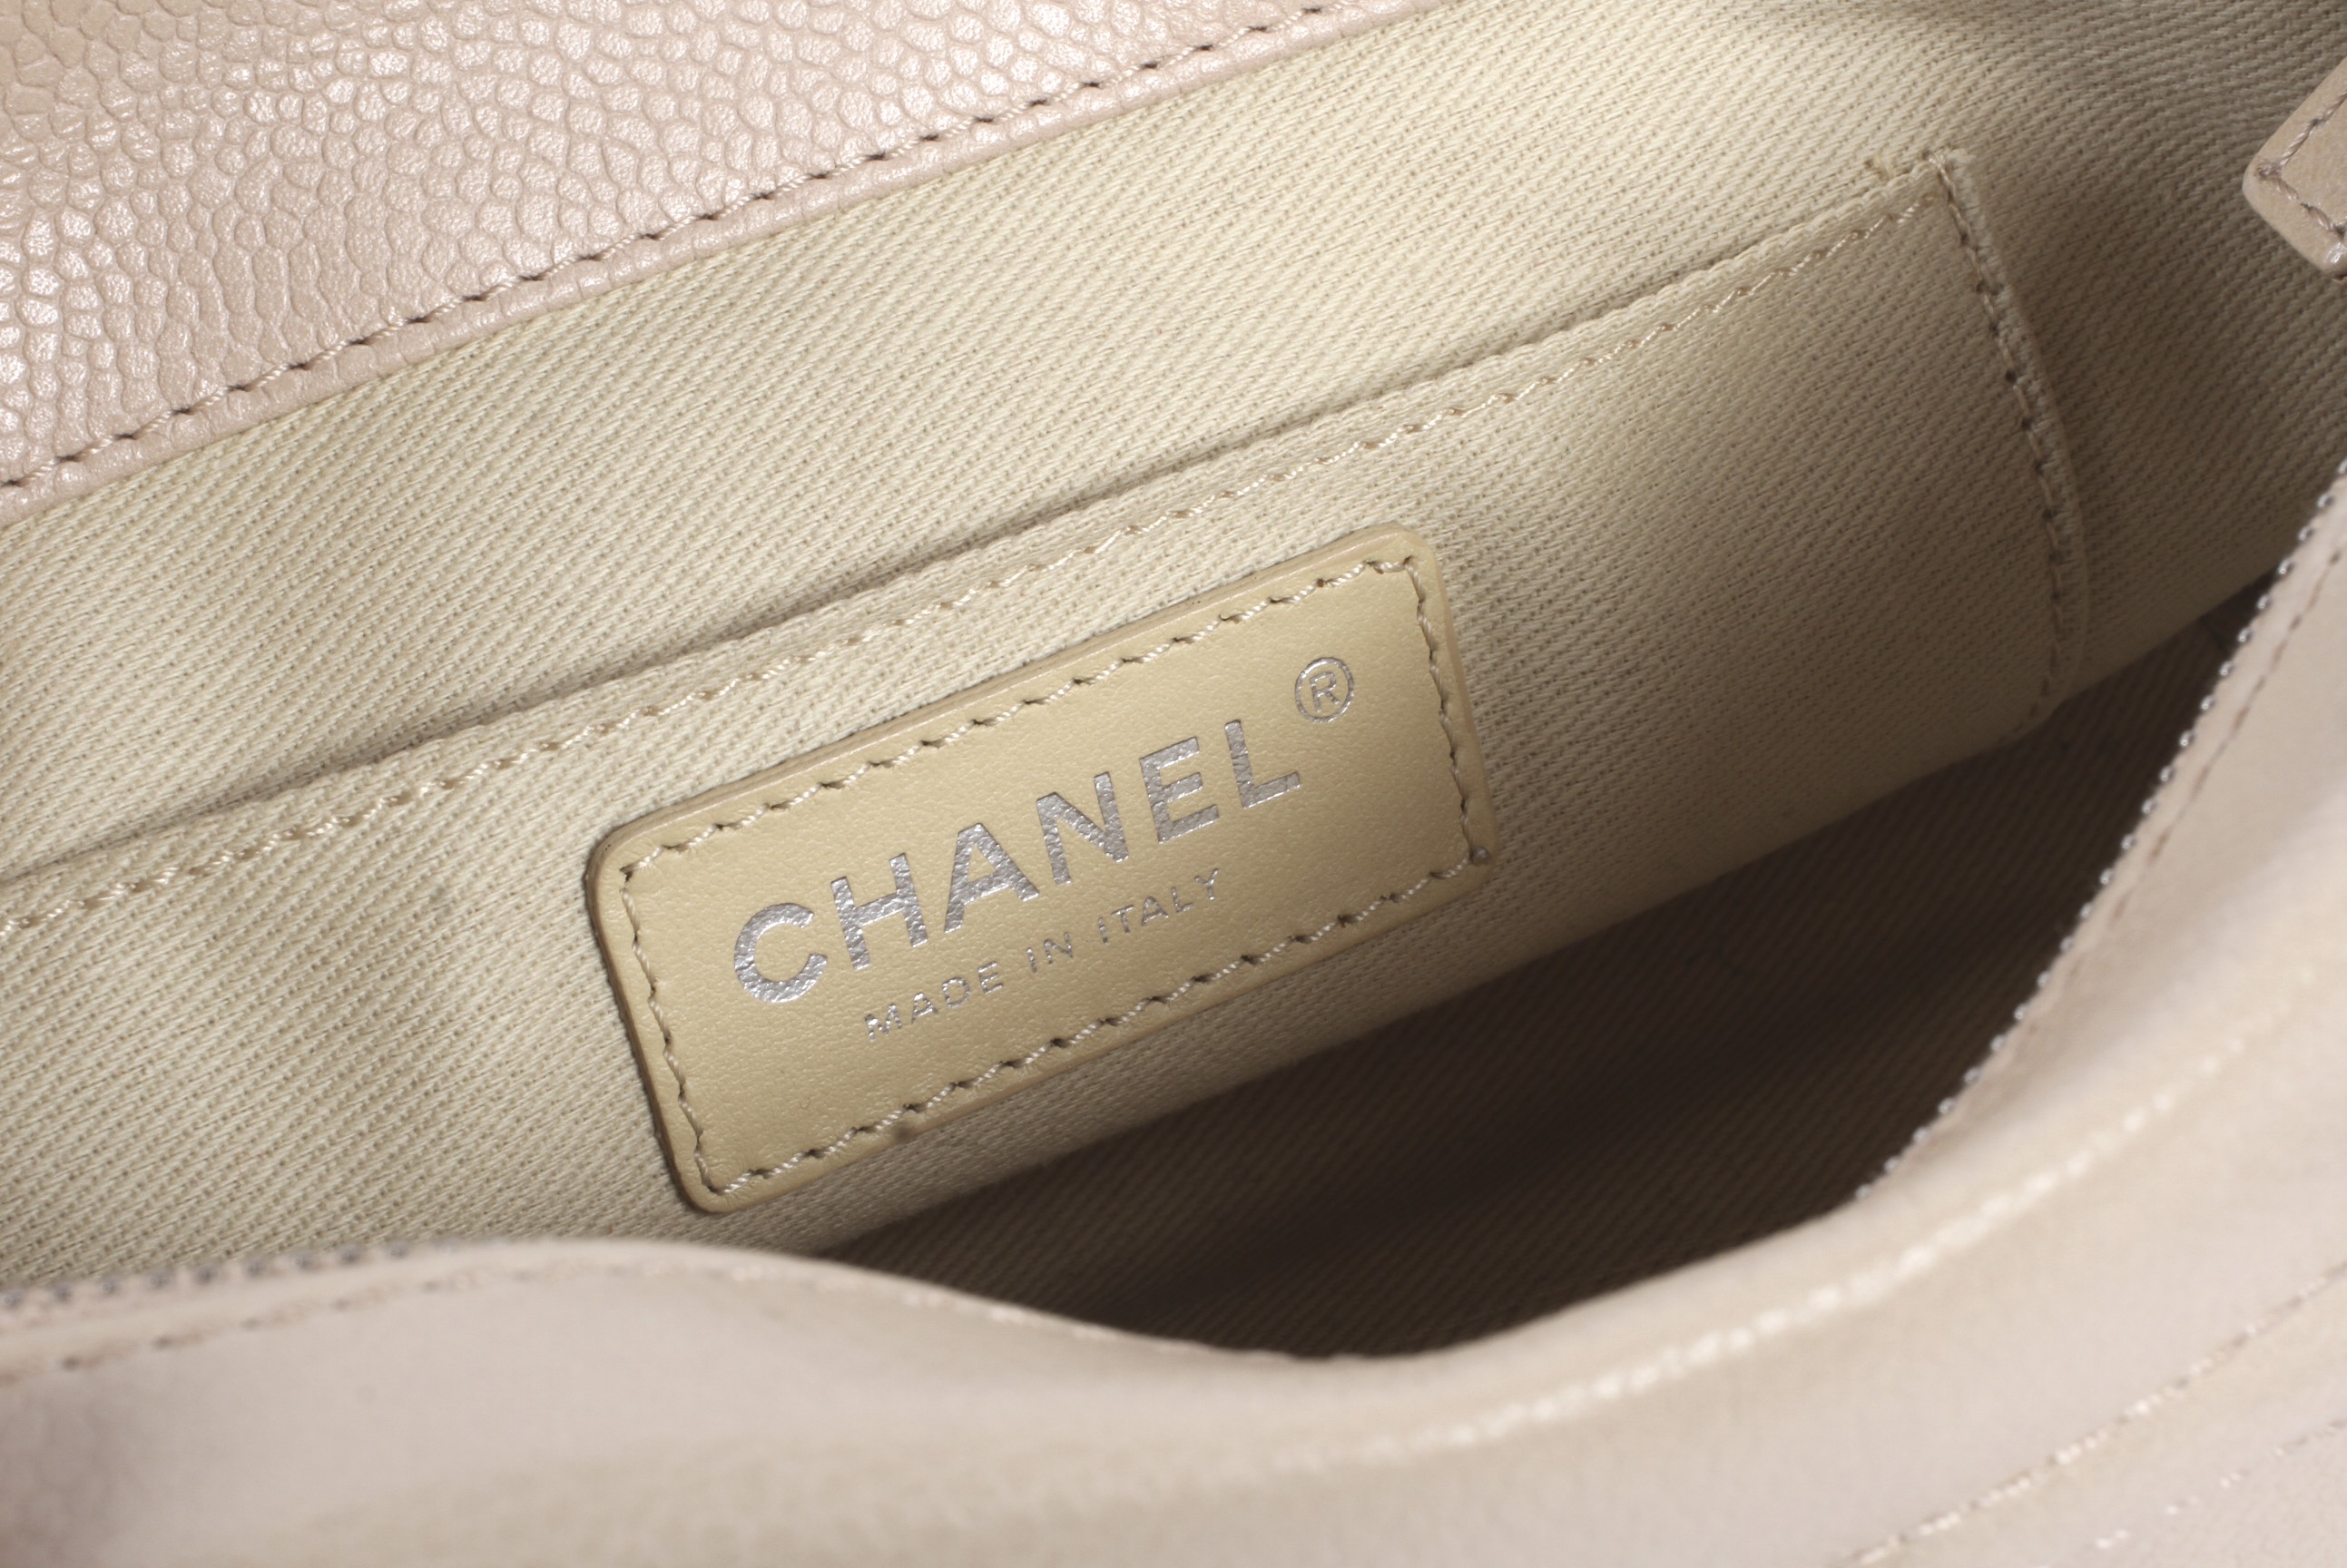 A Chanel nude leather handbag. - Image 3 of 4